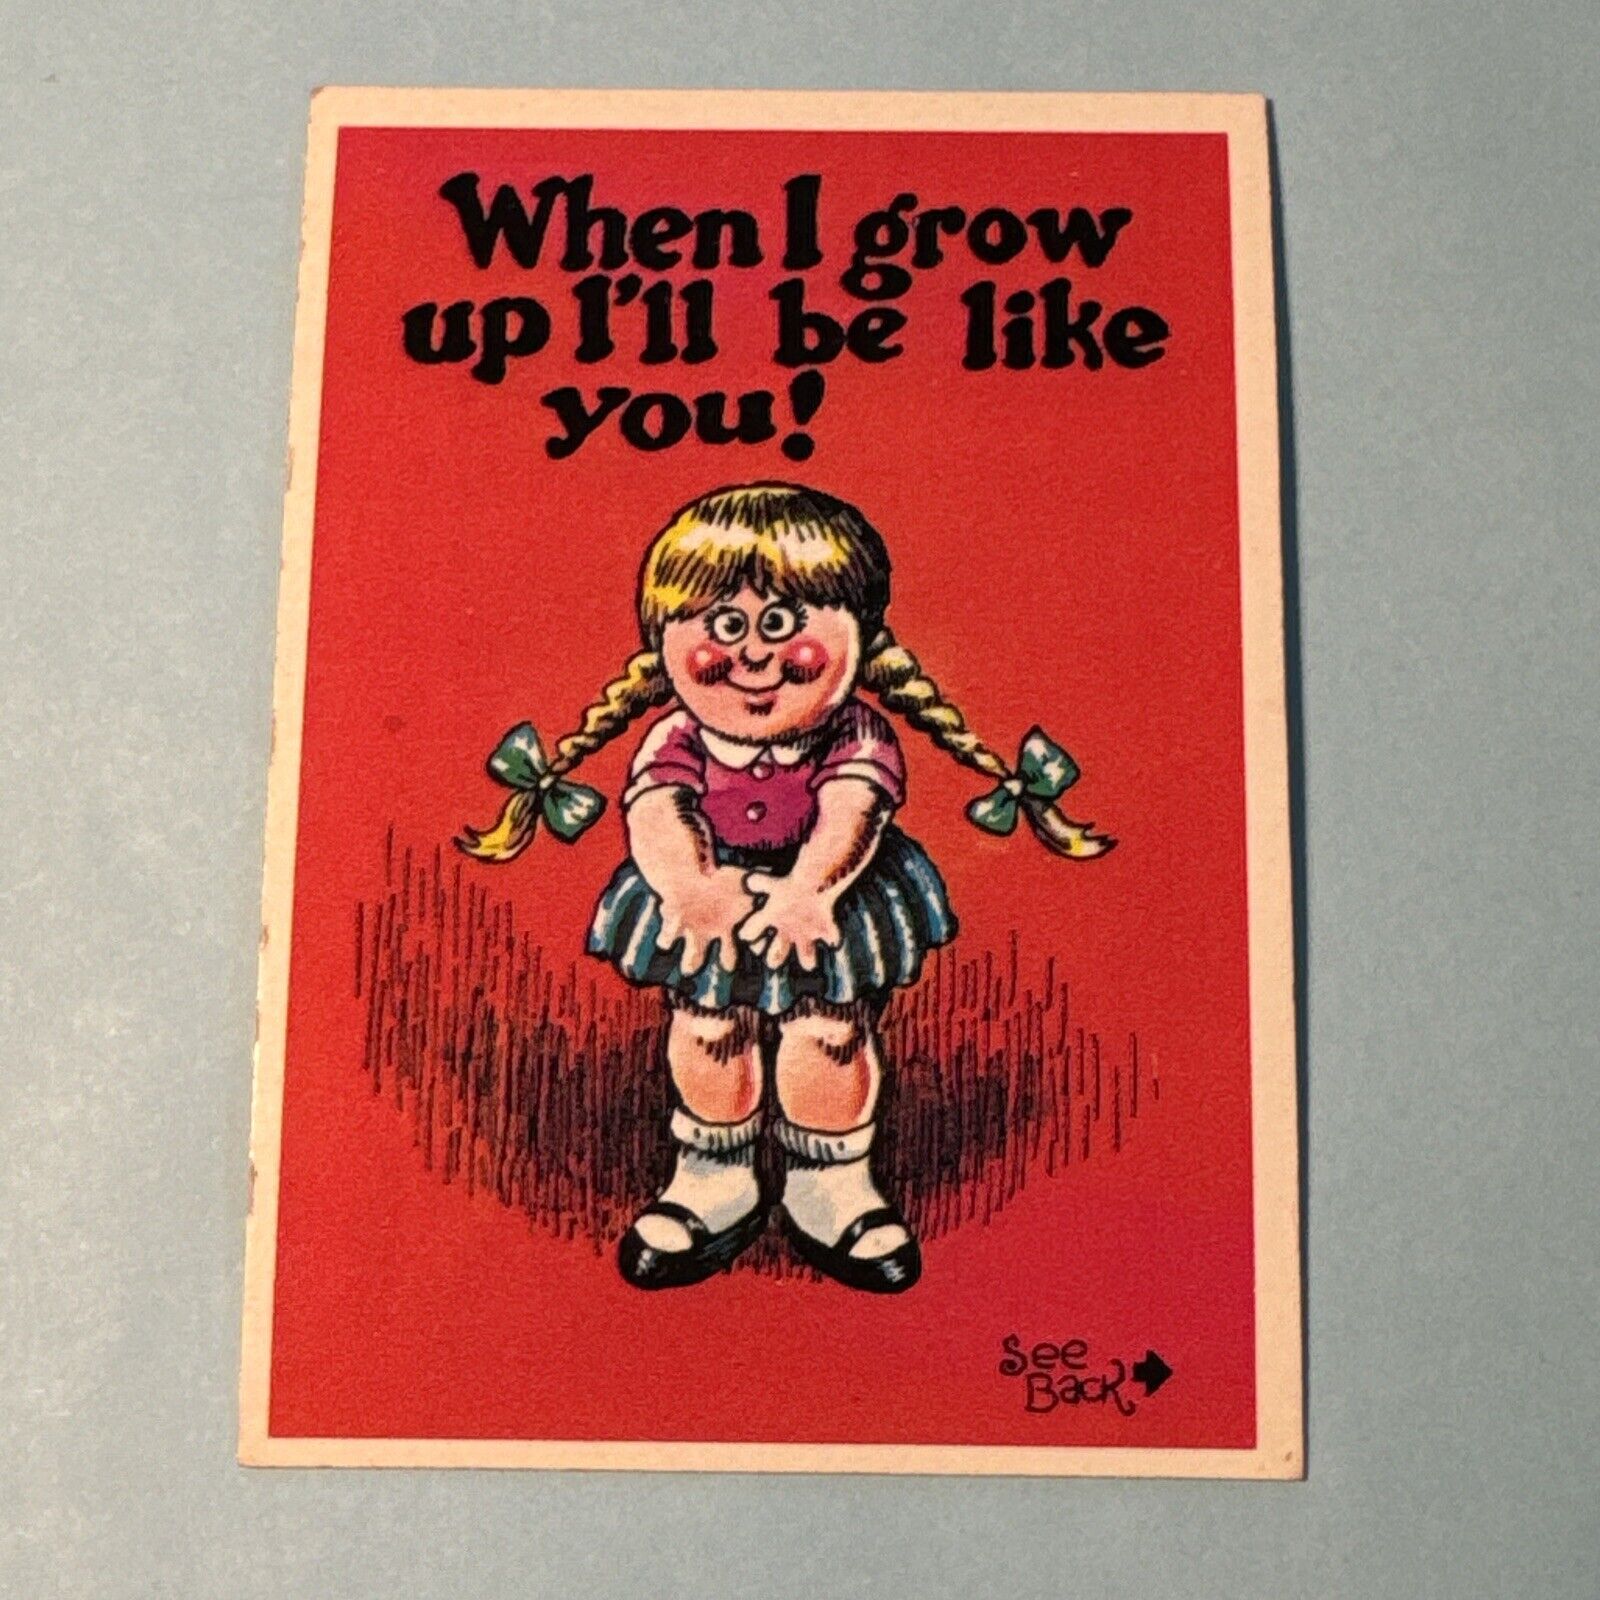 MONSTER GREETING CARDS #10 Topps 1965 Robert Crumb underground comic book artist